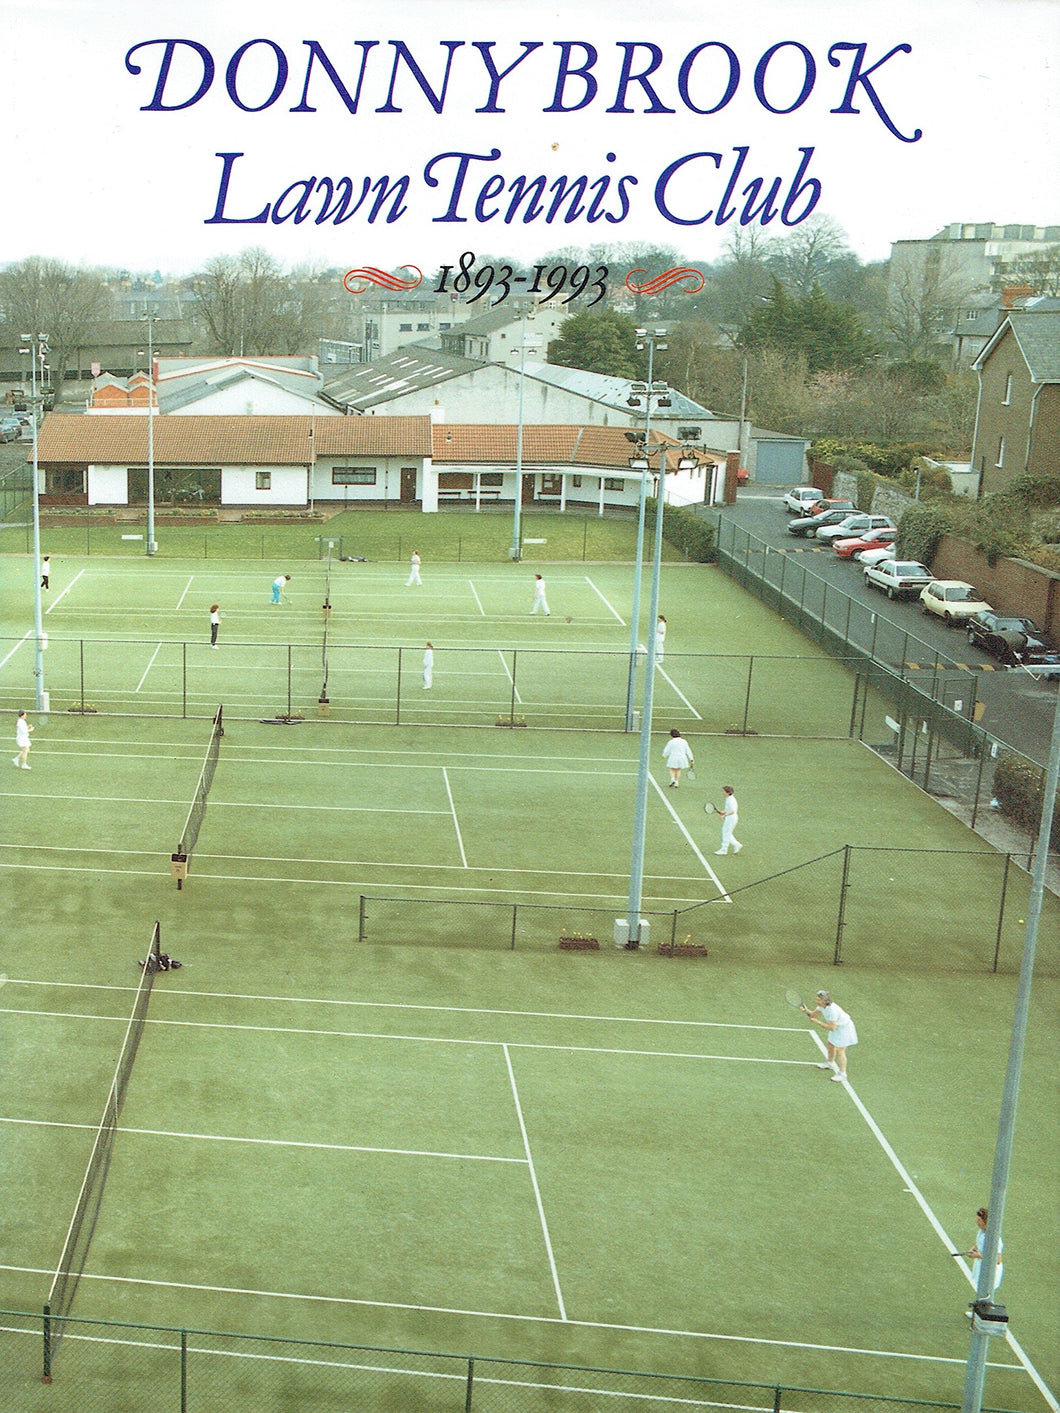 Donnybrook Lawn Tennis Club, 1893-1993 - A Centenary Commemoration